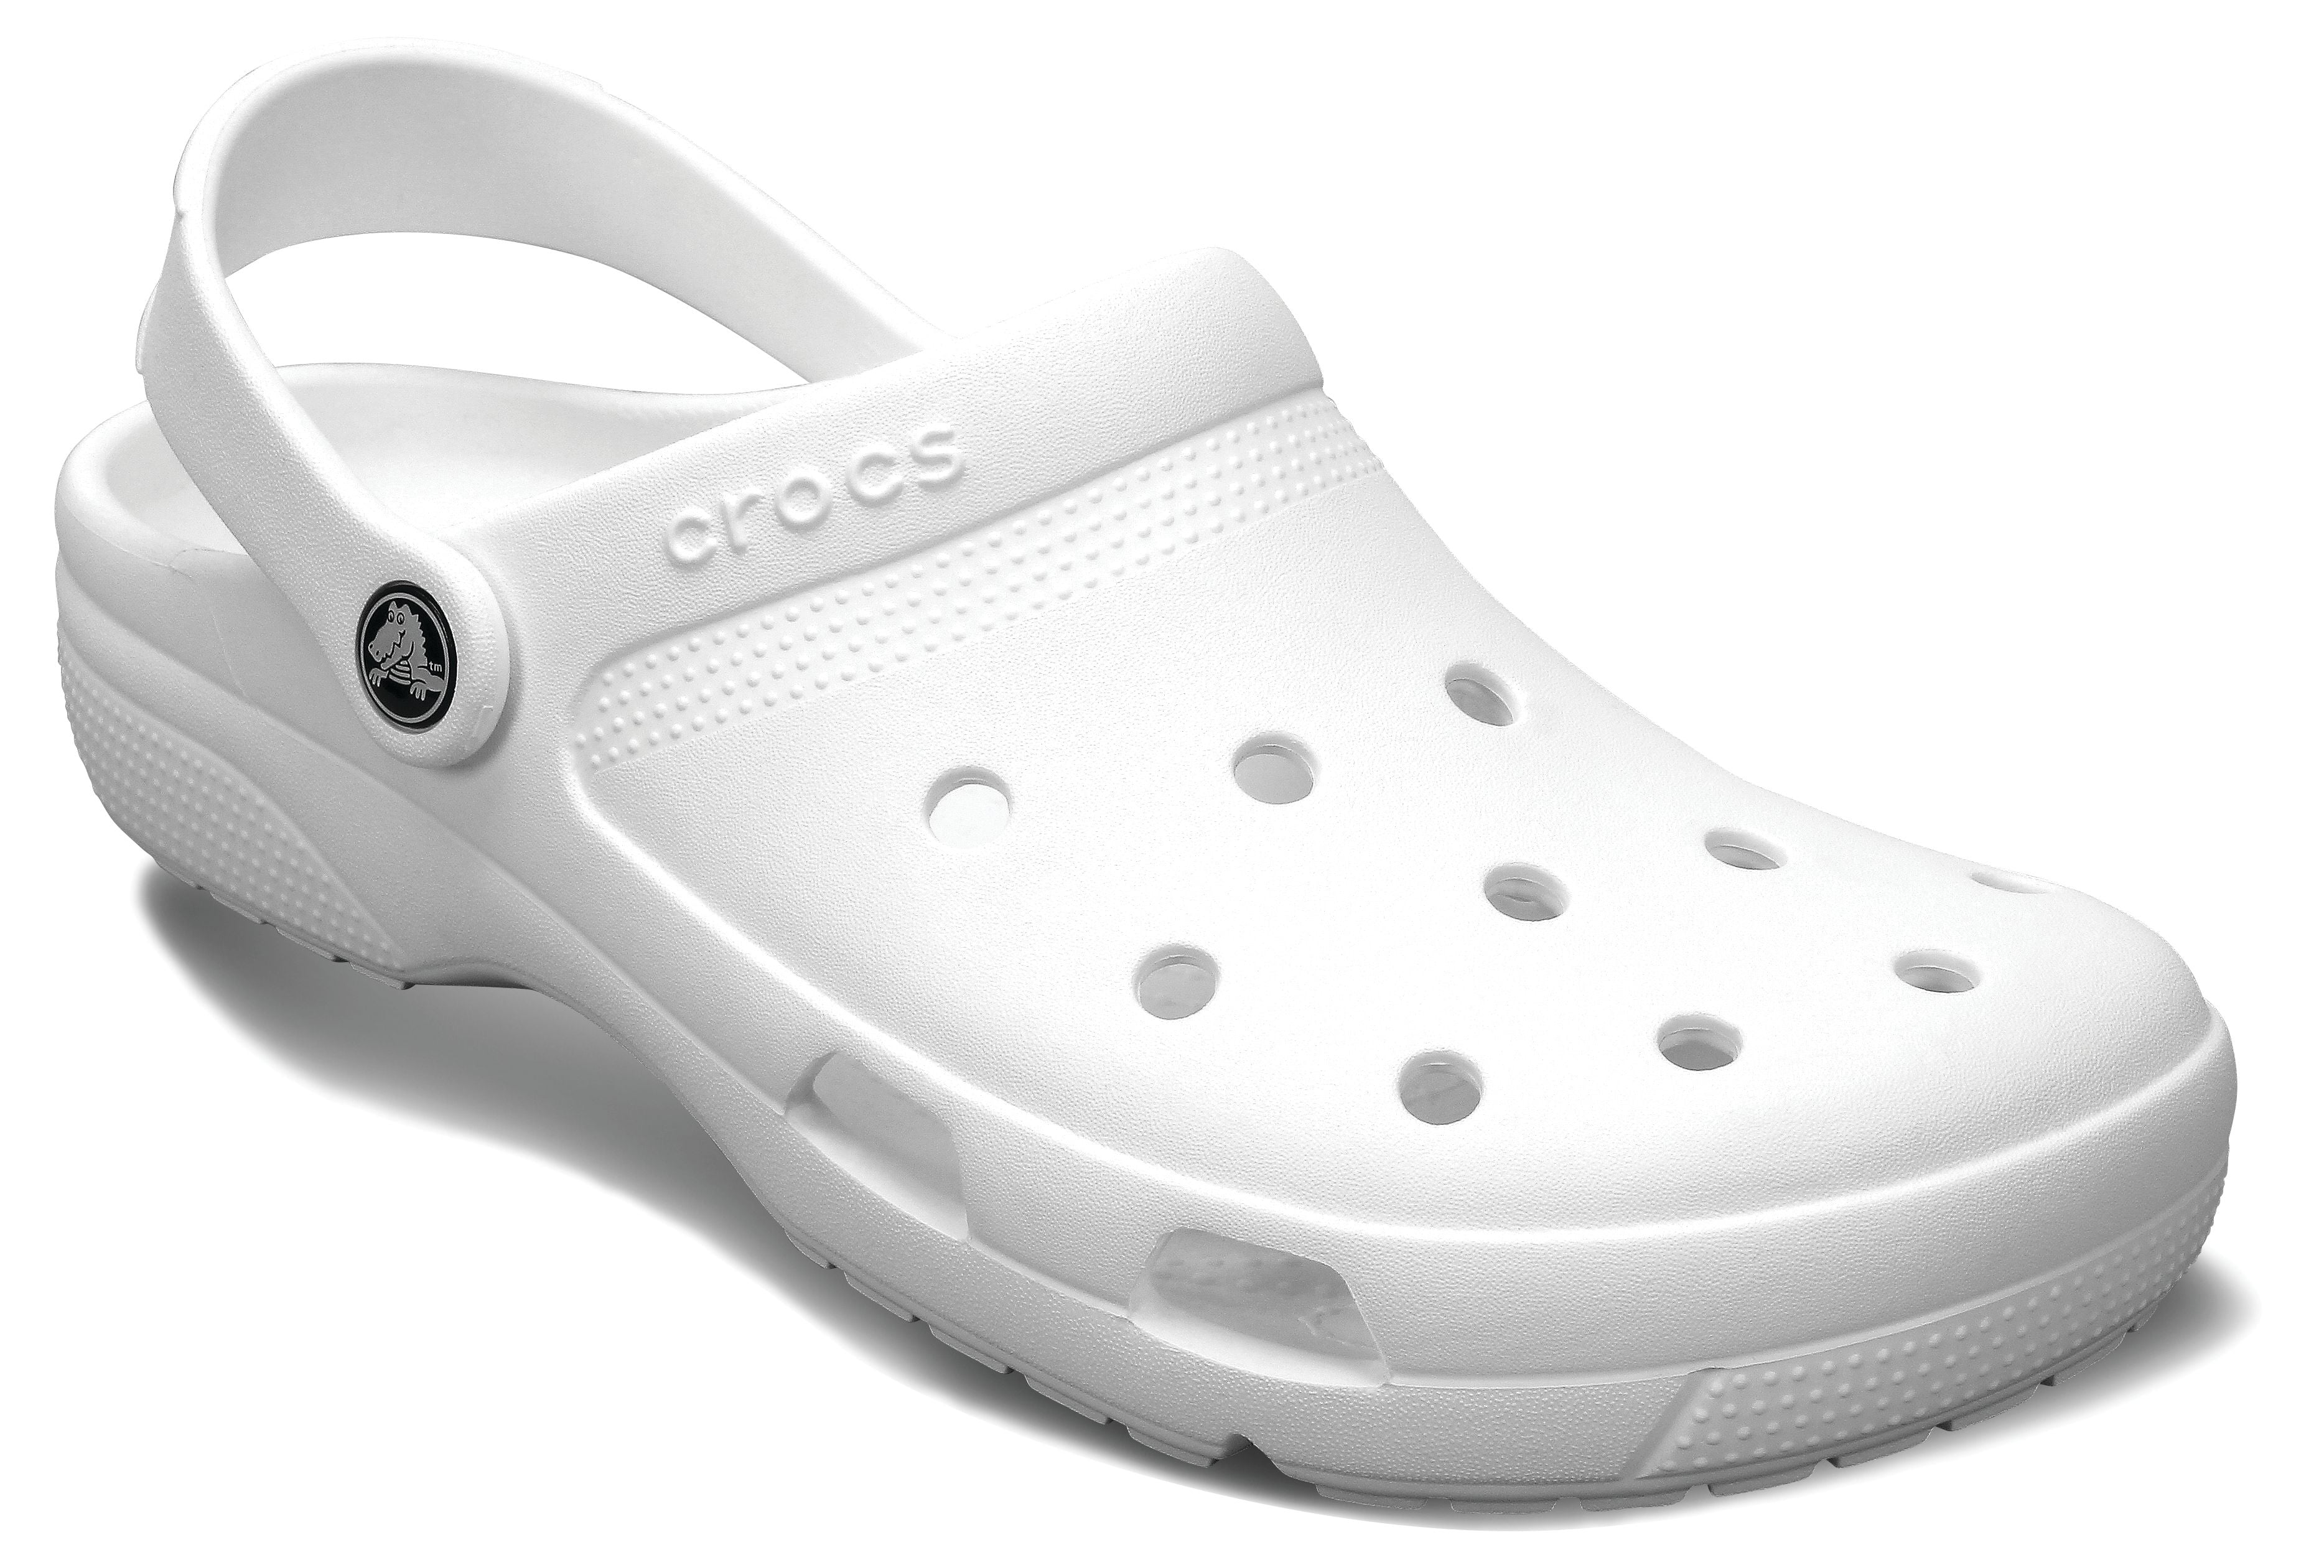 off brand crocs